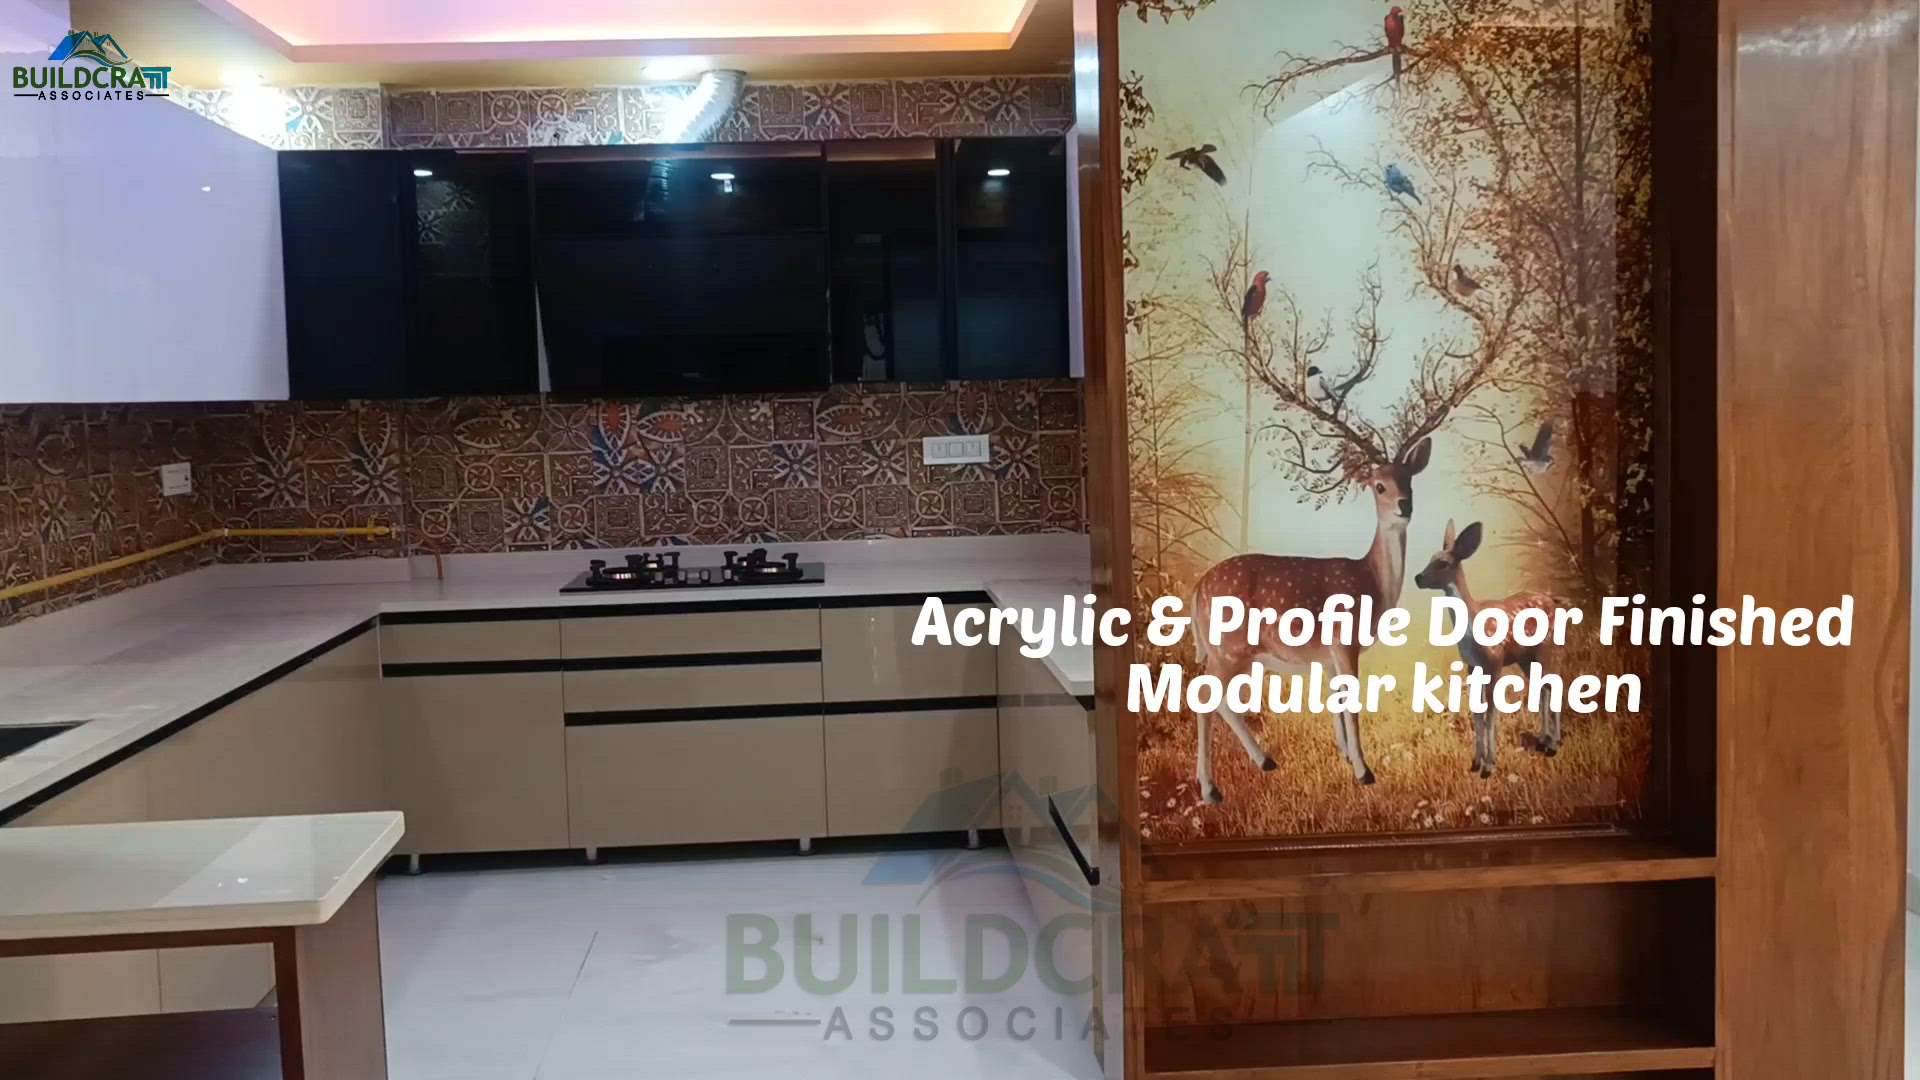 G-Shape Modular kitchen Made by Build Craft Associates.
 #ModularKitchen #Buildcraftassociates #Shorts #Viral  #TrendingNow